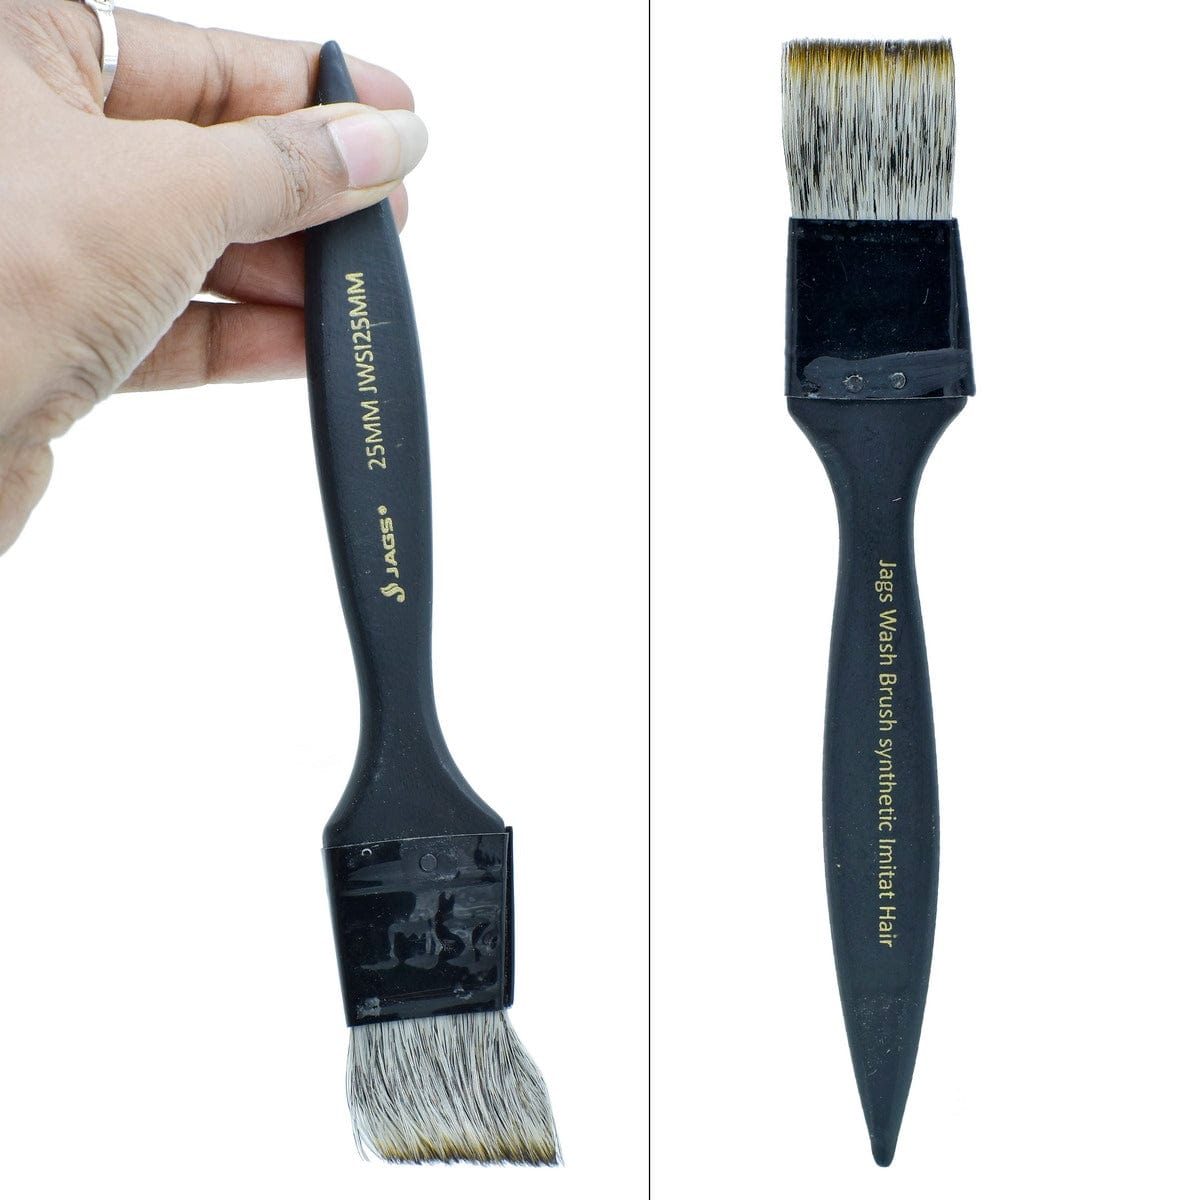 jags-mumbai Brush Deluxe Wash Brush: Synthetic Imitation Hair, Black Handle - 25MM